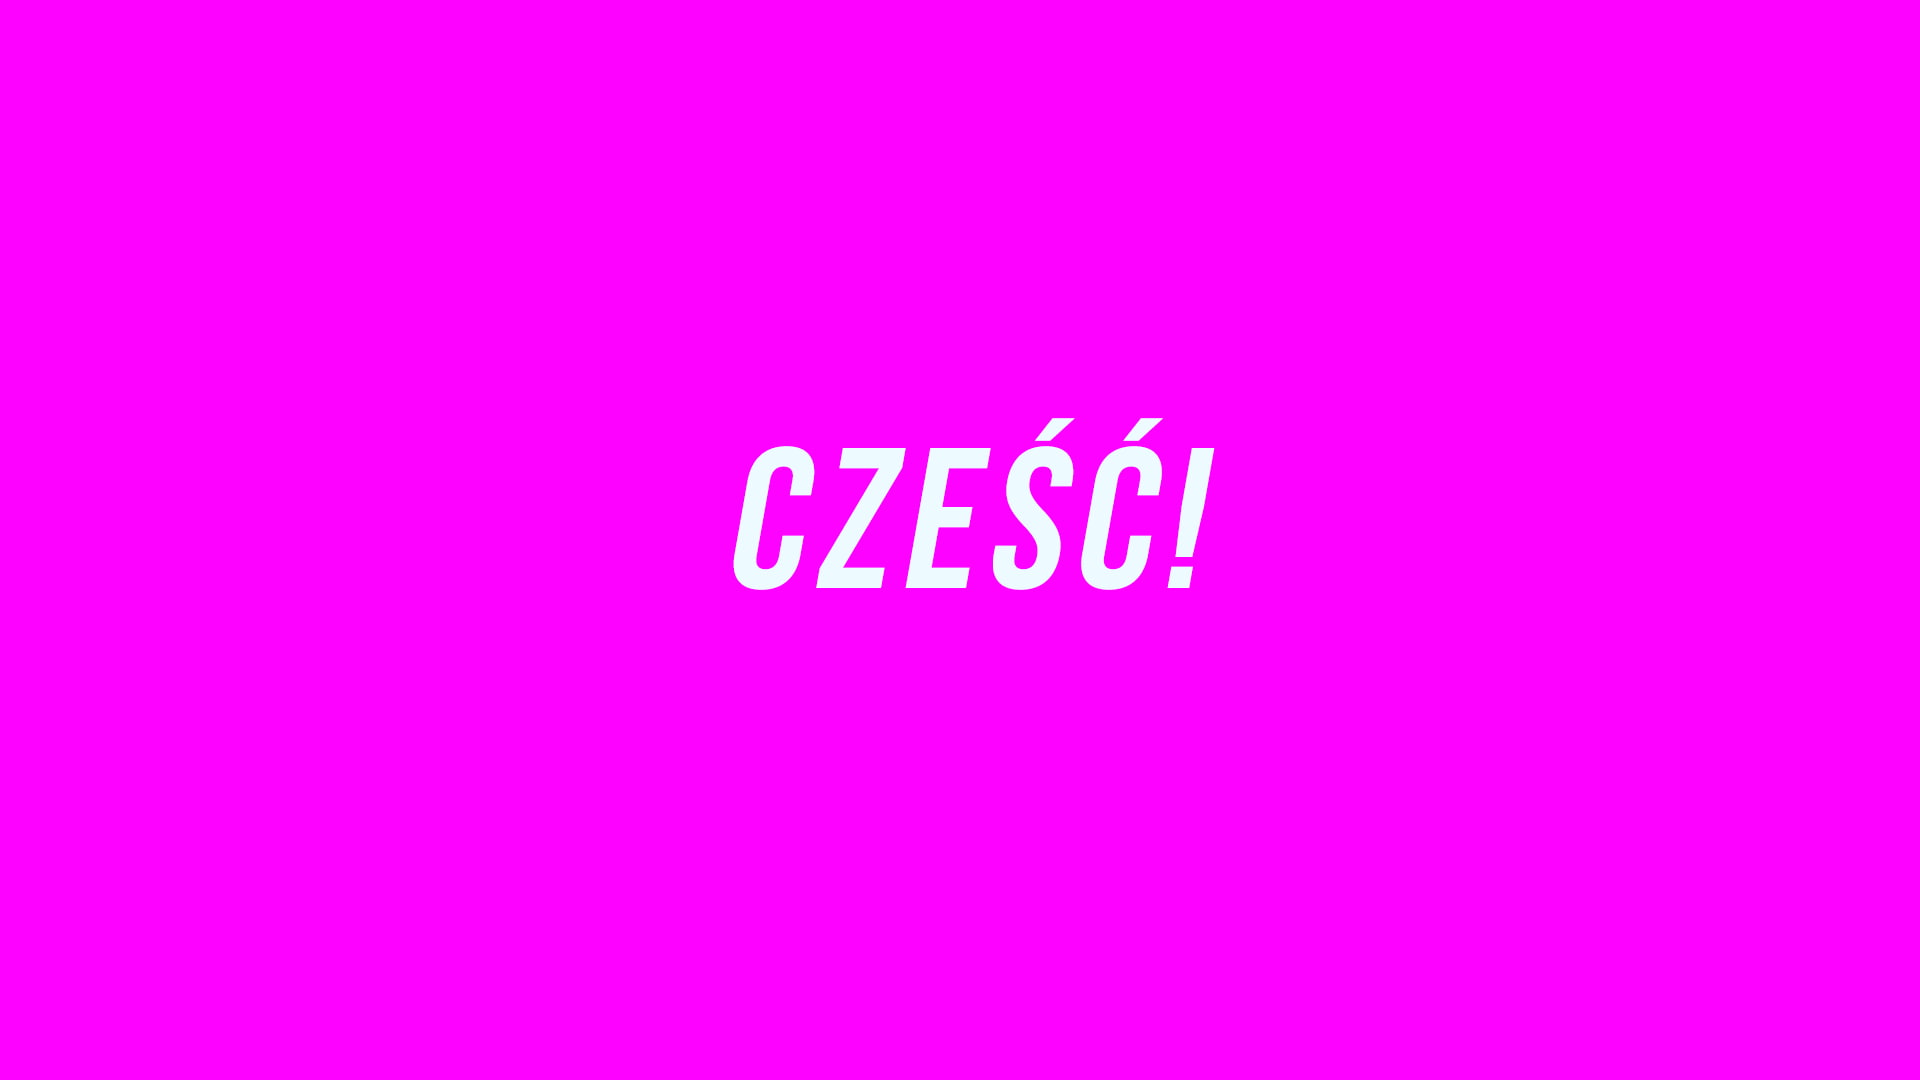 Polish, quote, minimalism, communication, western script, text